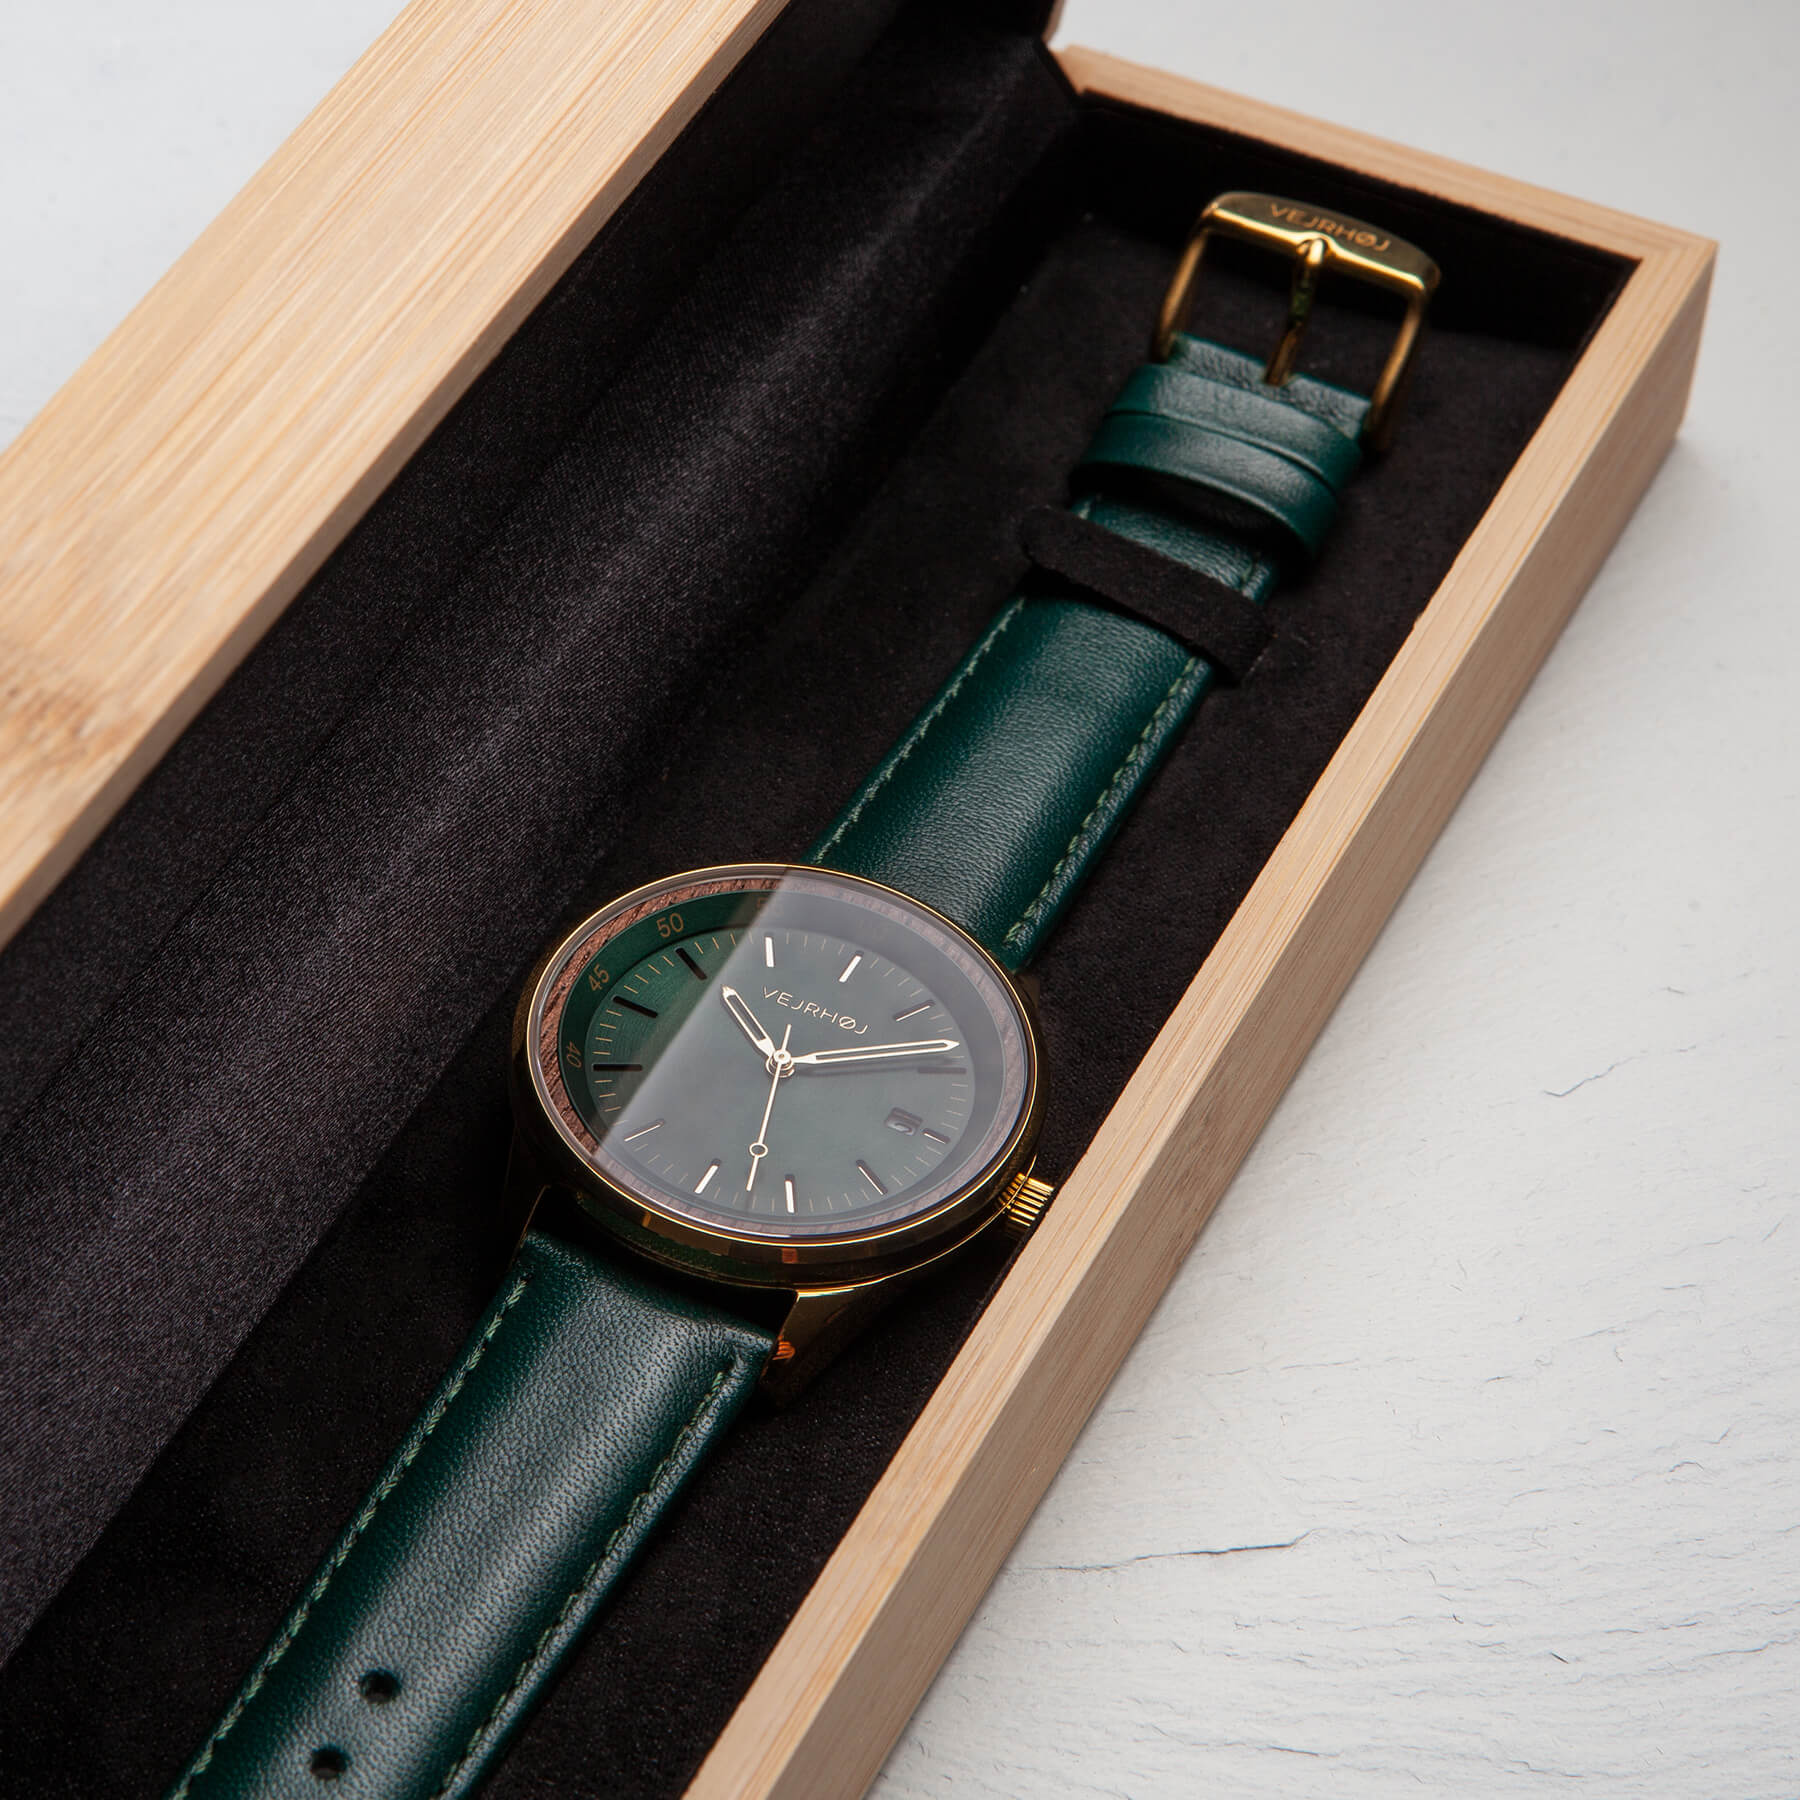 VEJRHØJのロゴ付き木箱に入った緑のメンズ機械式腕時計